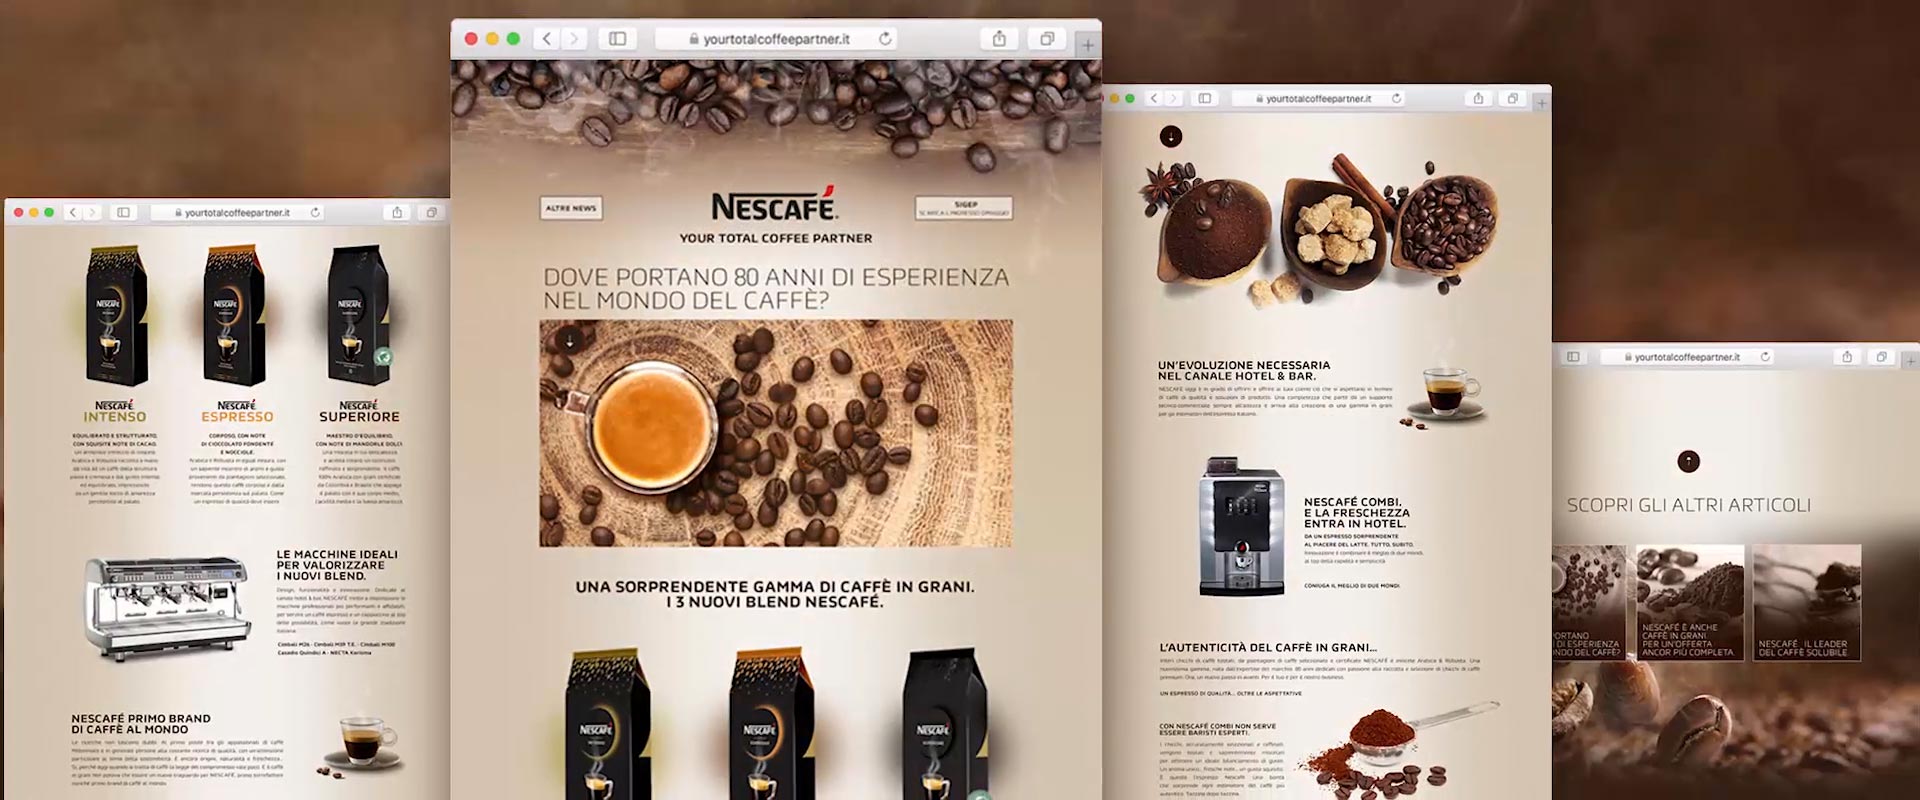 Nescafé R&G coffee launch